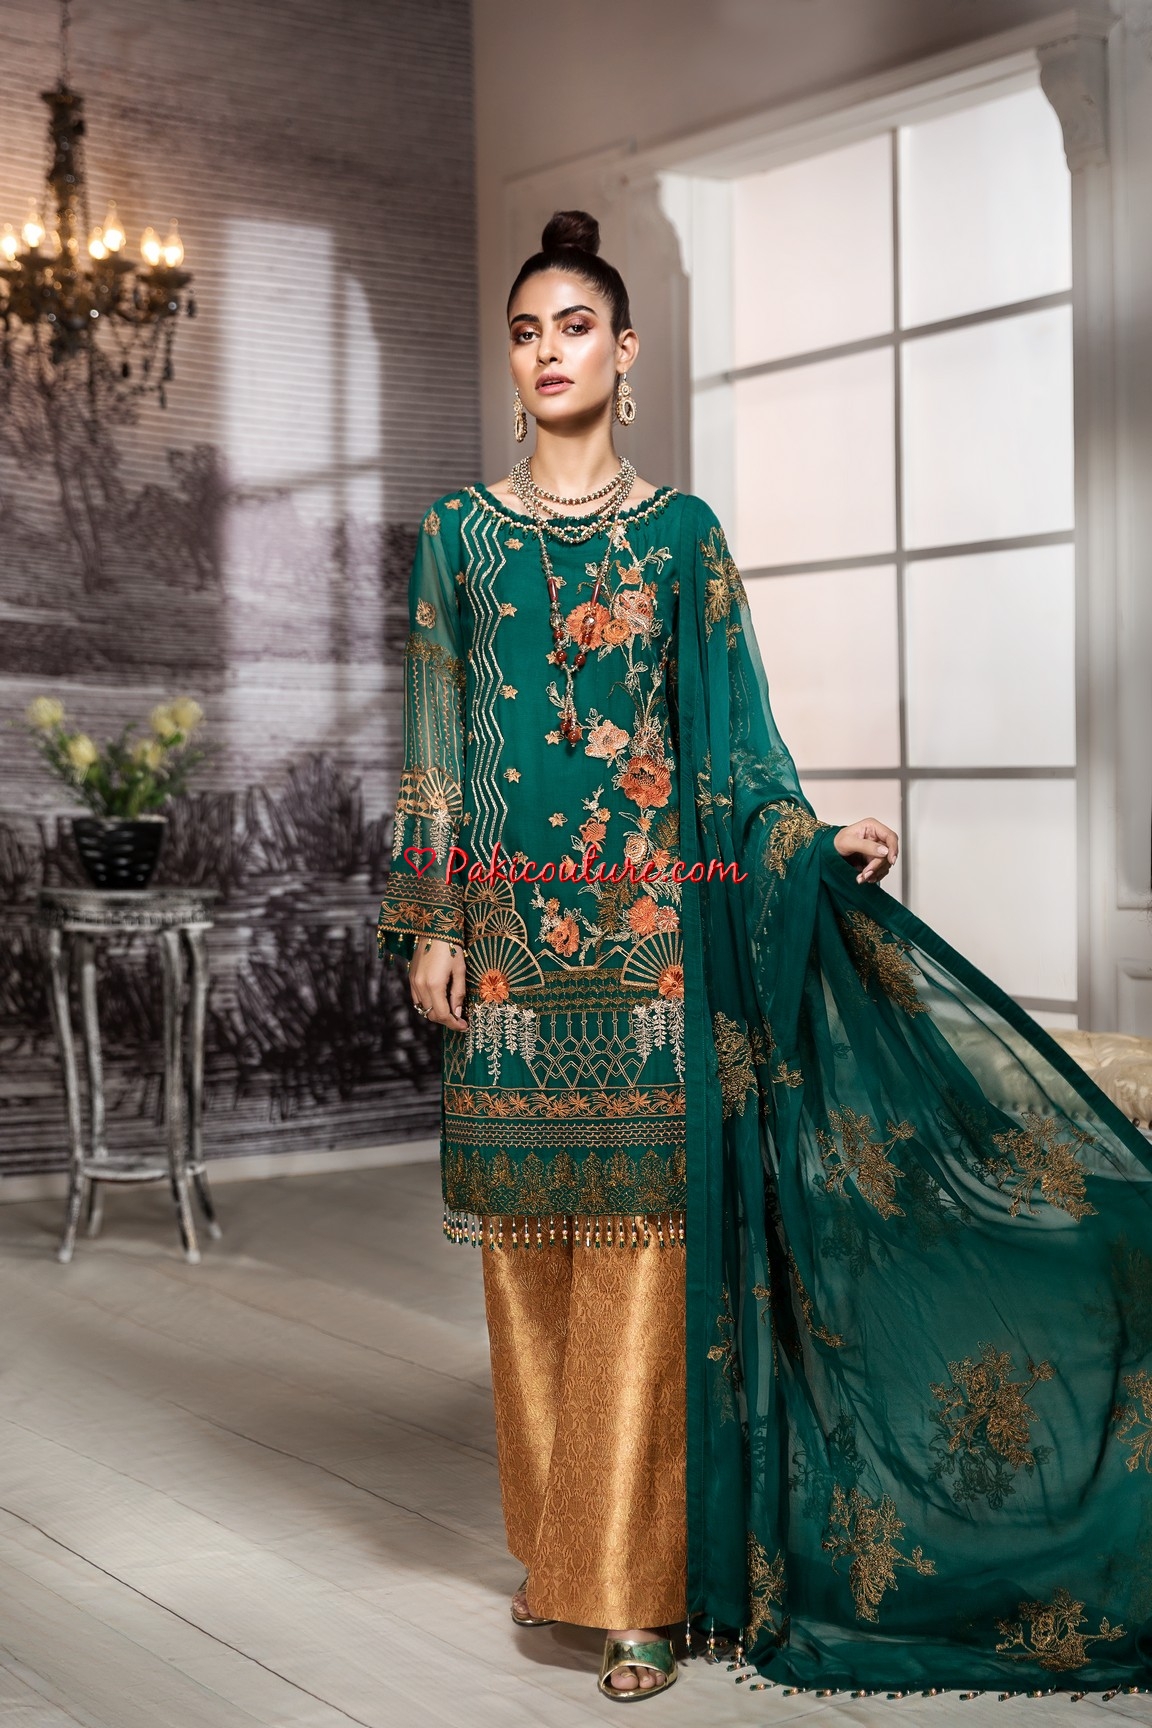 Luxury by Razab Collection 2020 Shop Online | Buy Pakistani Fashion ...